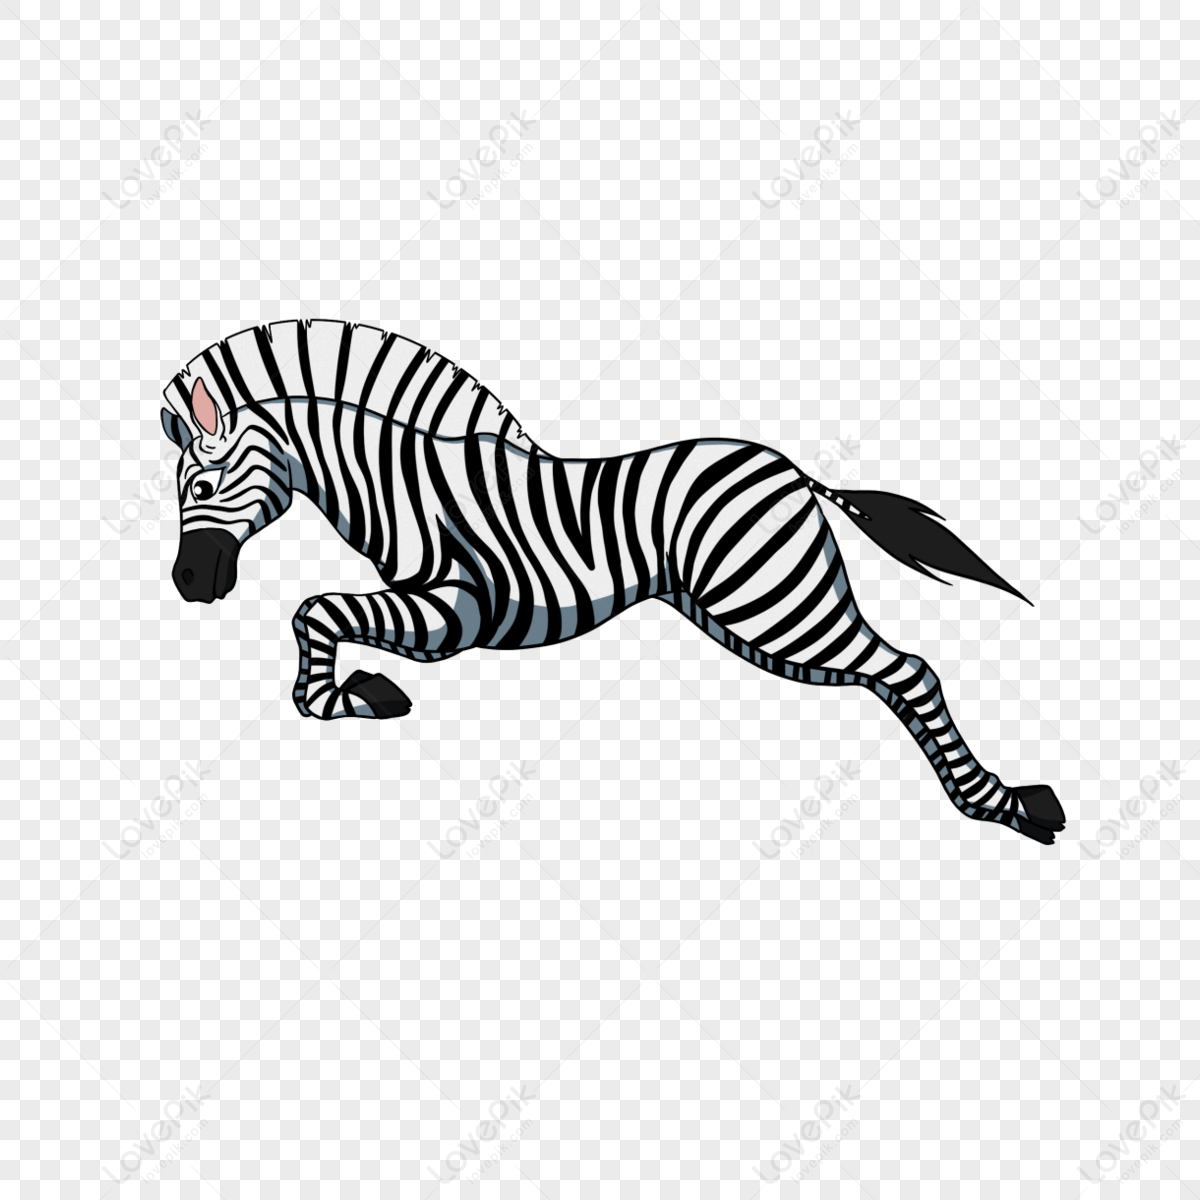 Zebra Cartoon Clipart Transparent Background, Zebra Raising Legs Clipart  Cartoon Style, Zebra, Zebra Clip Art, Cartoon Style PNG Image For Free  Download